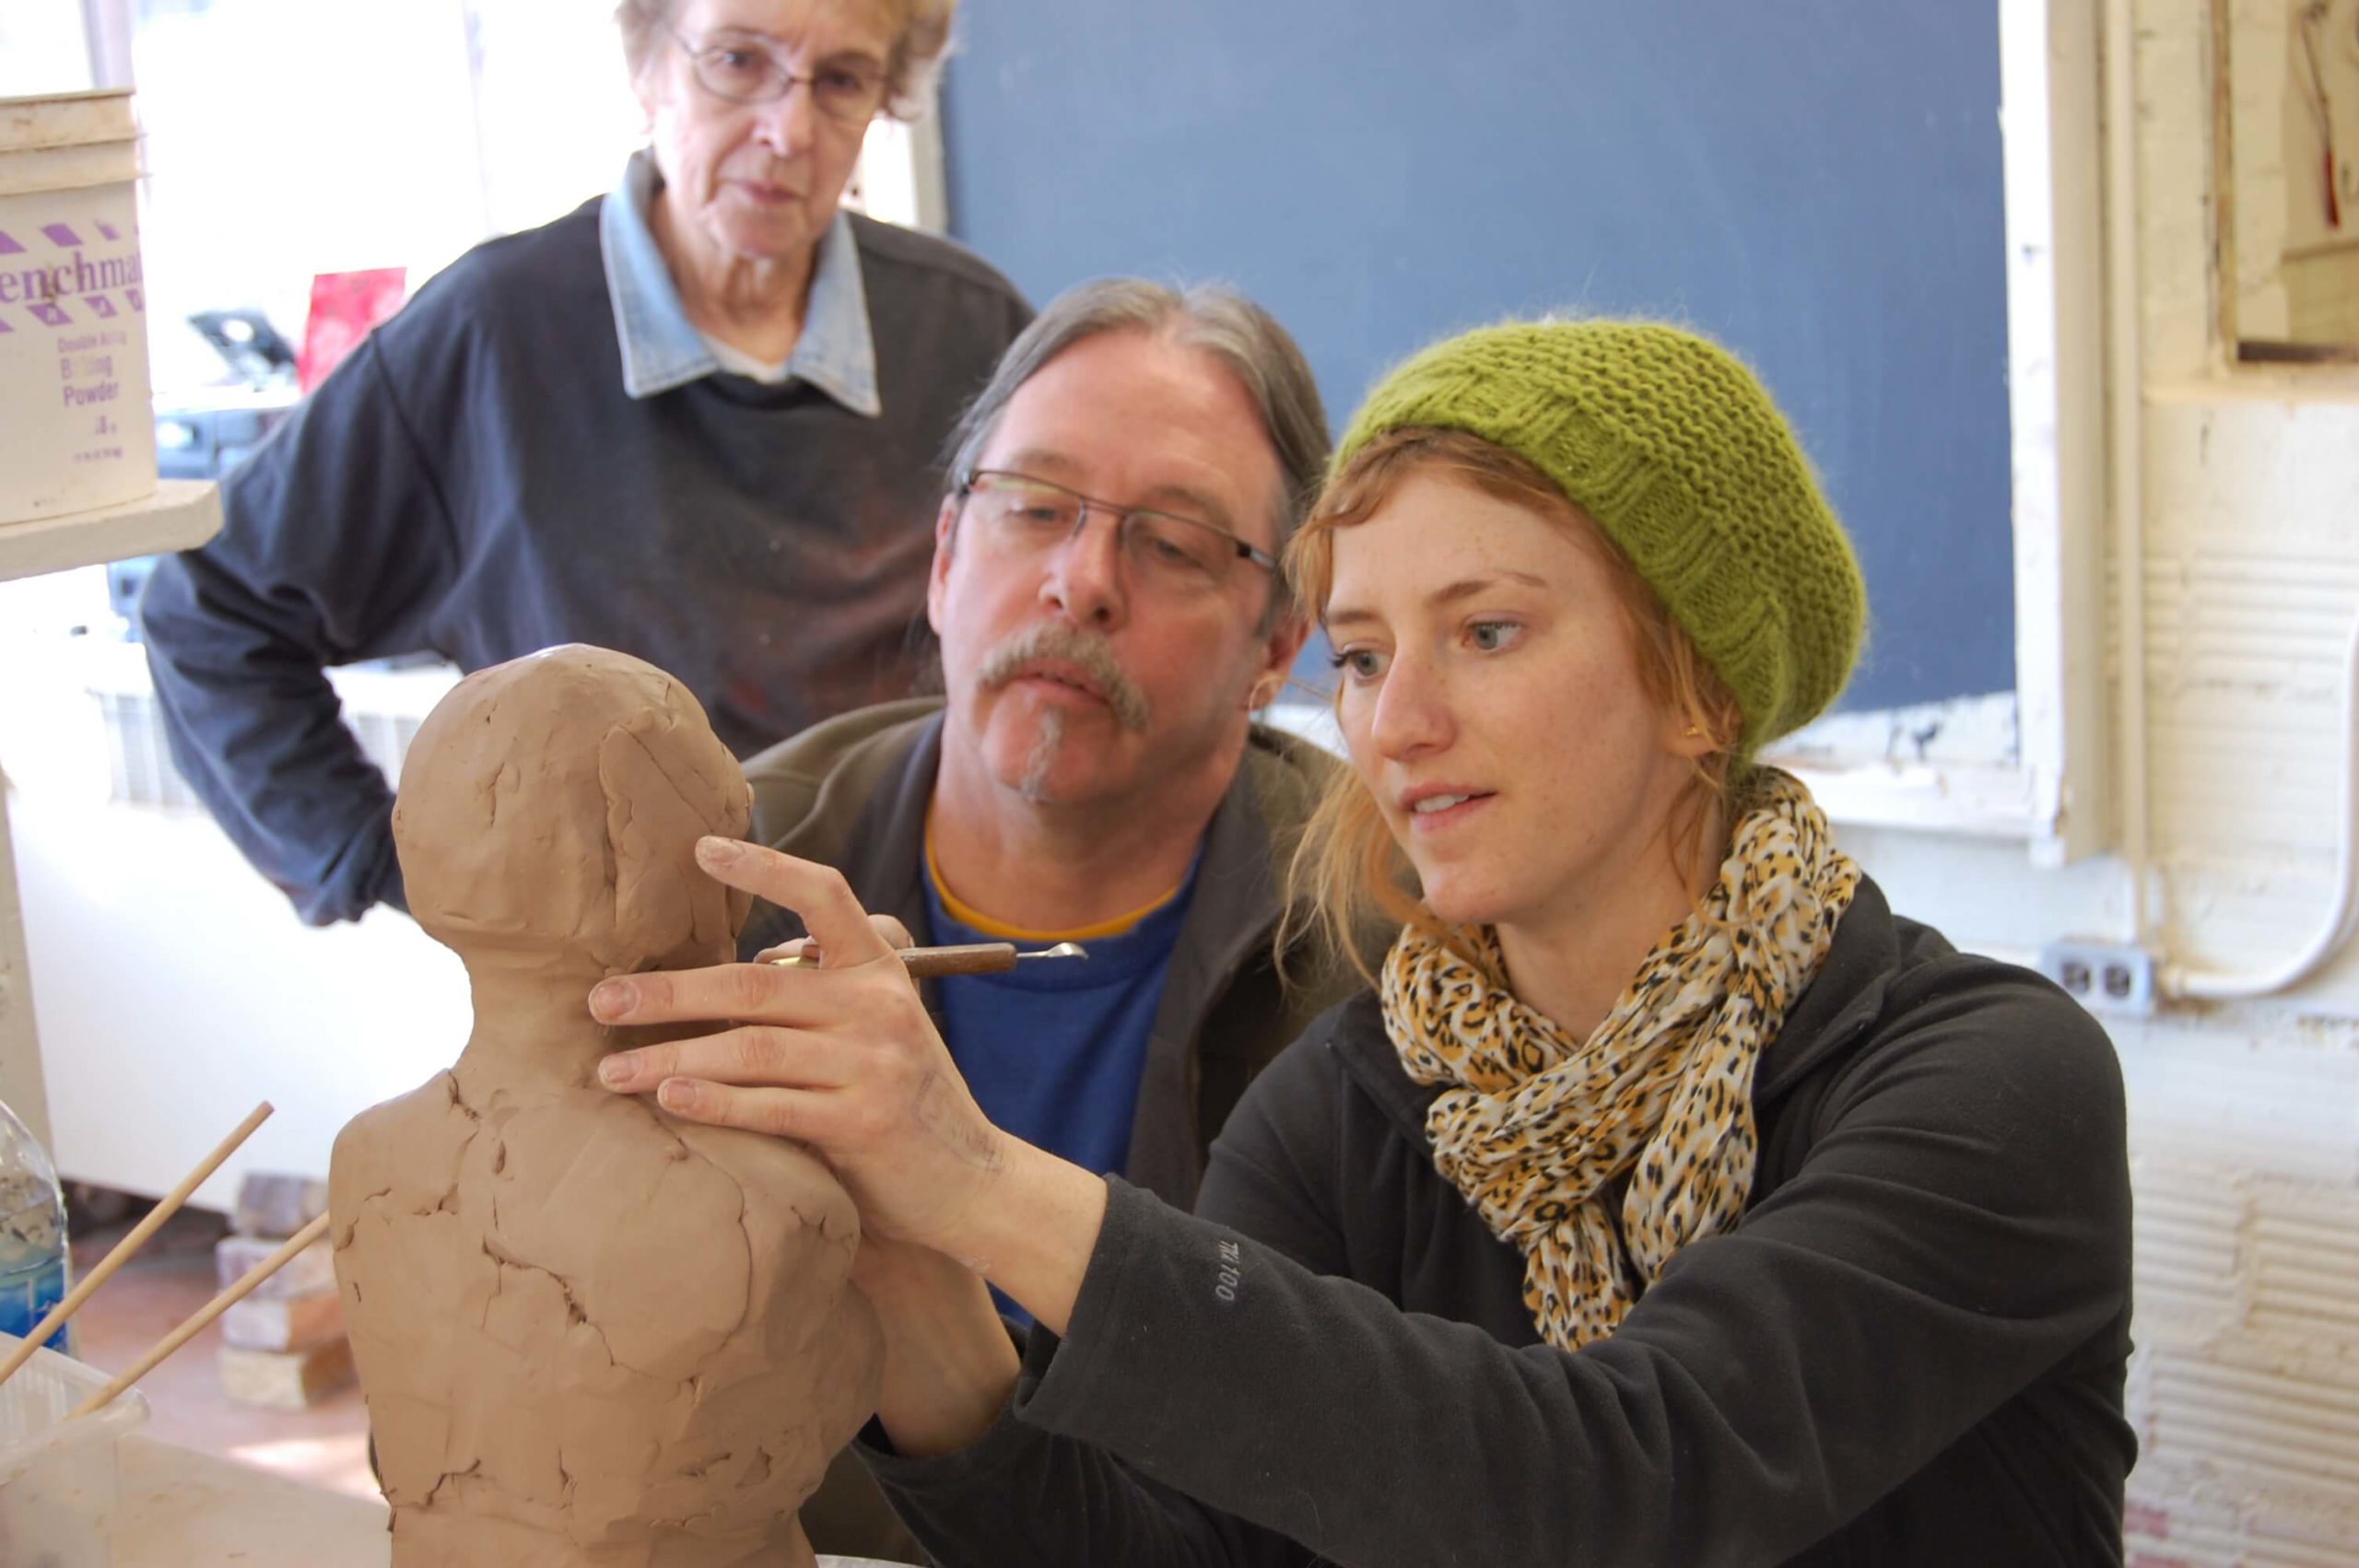 People look on as artist sculpts in clay